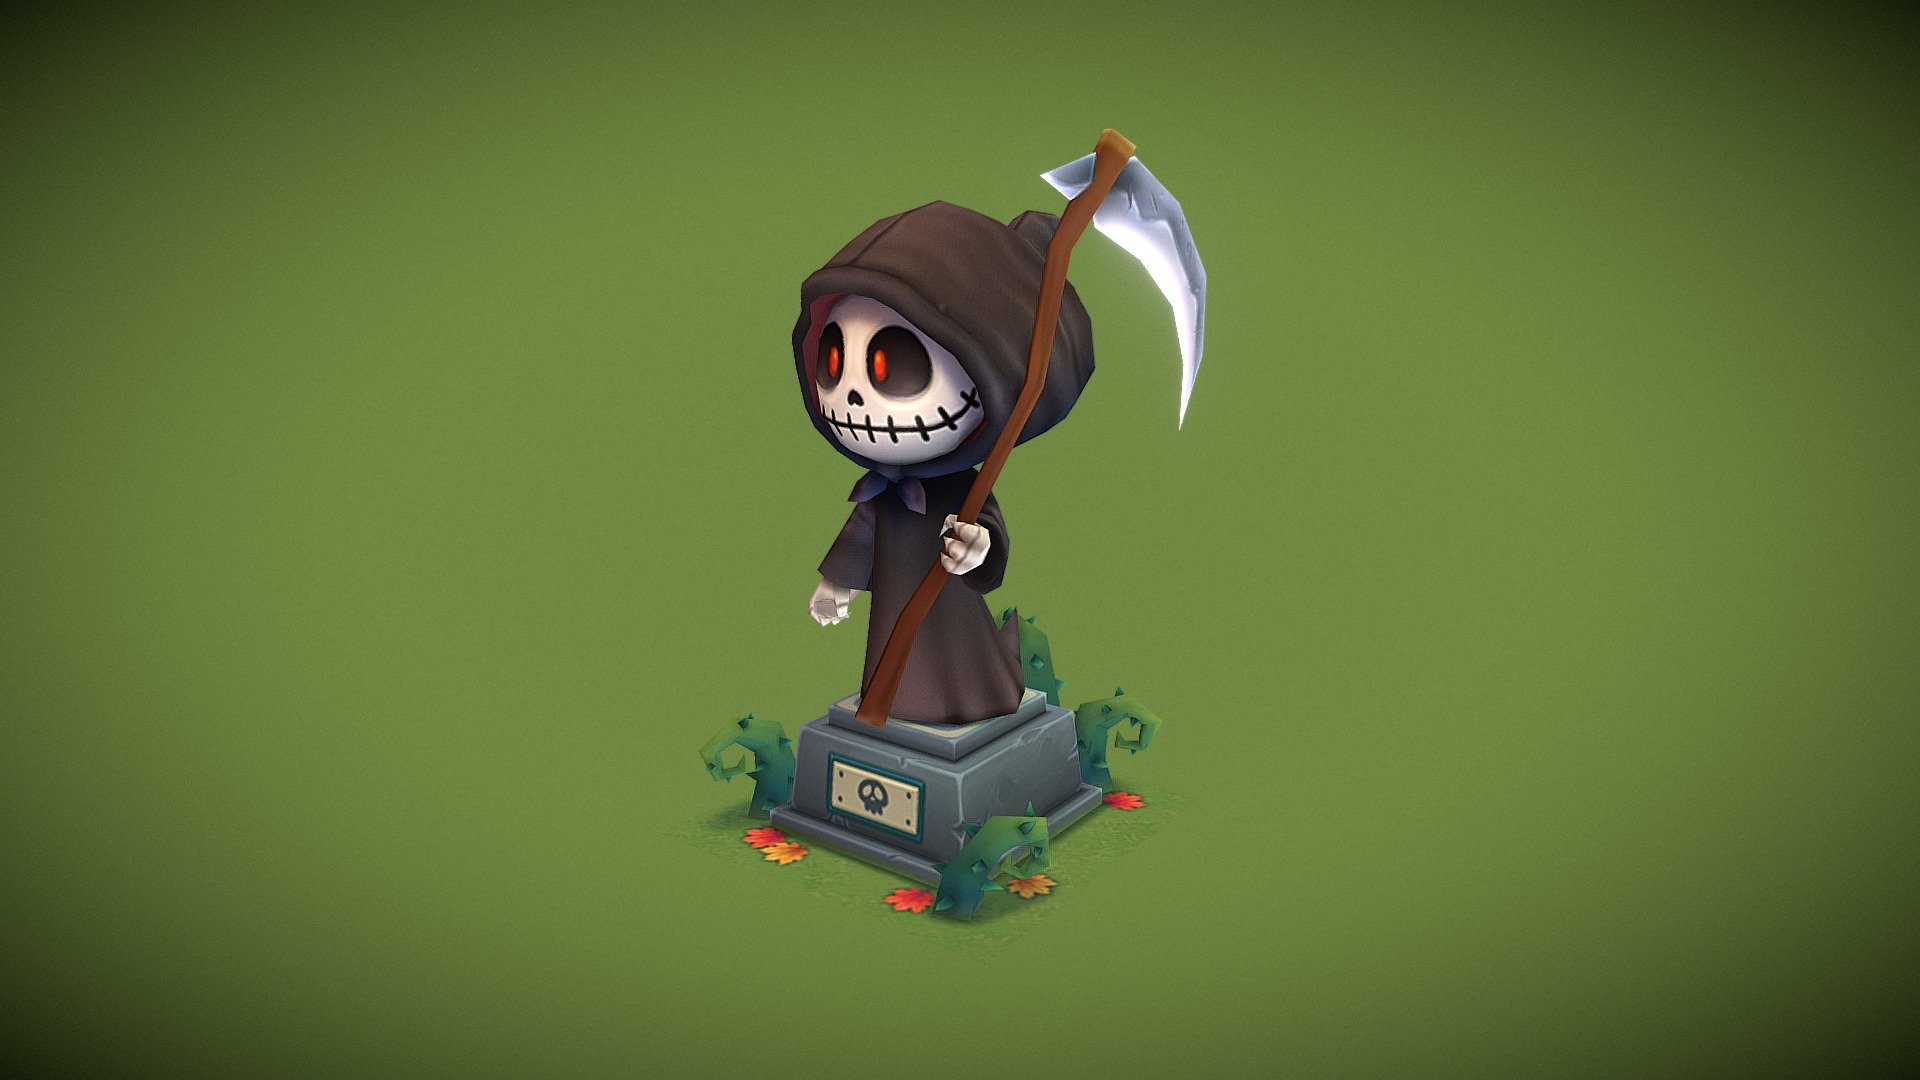 Grim Reaper Rigged ~ 3D Model ~ Download #91030224